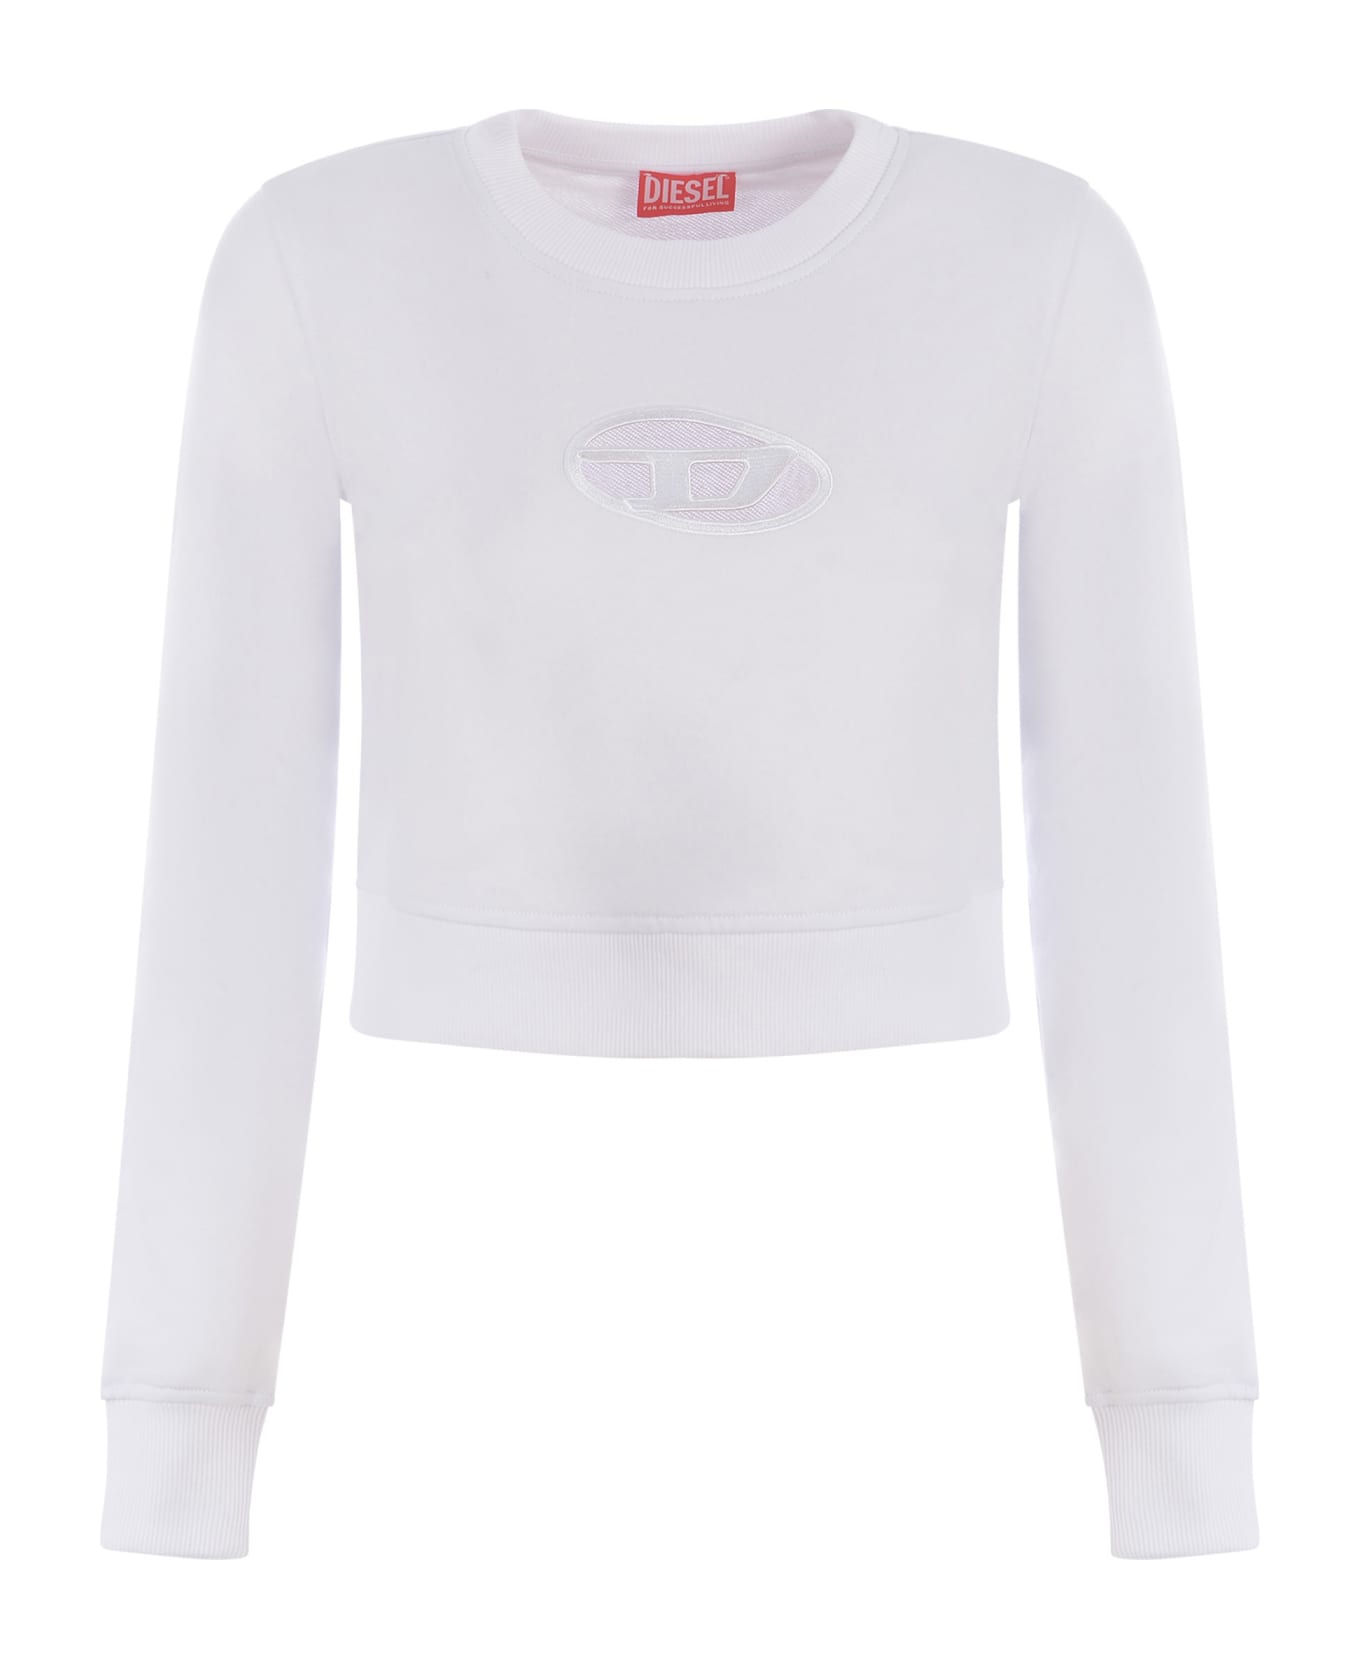 Diesel F-slimmy-od Felpa White Cropped Sweatshirt With Cut-out Oval-d - F Slimmy Od - White フリース